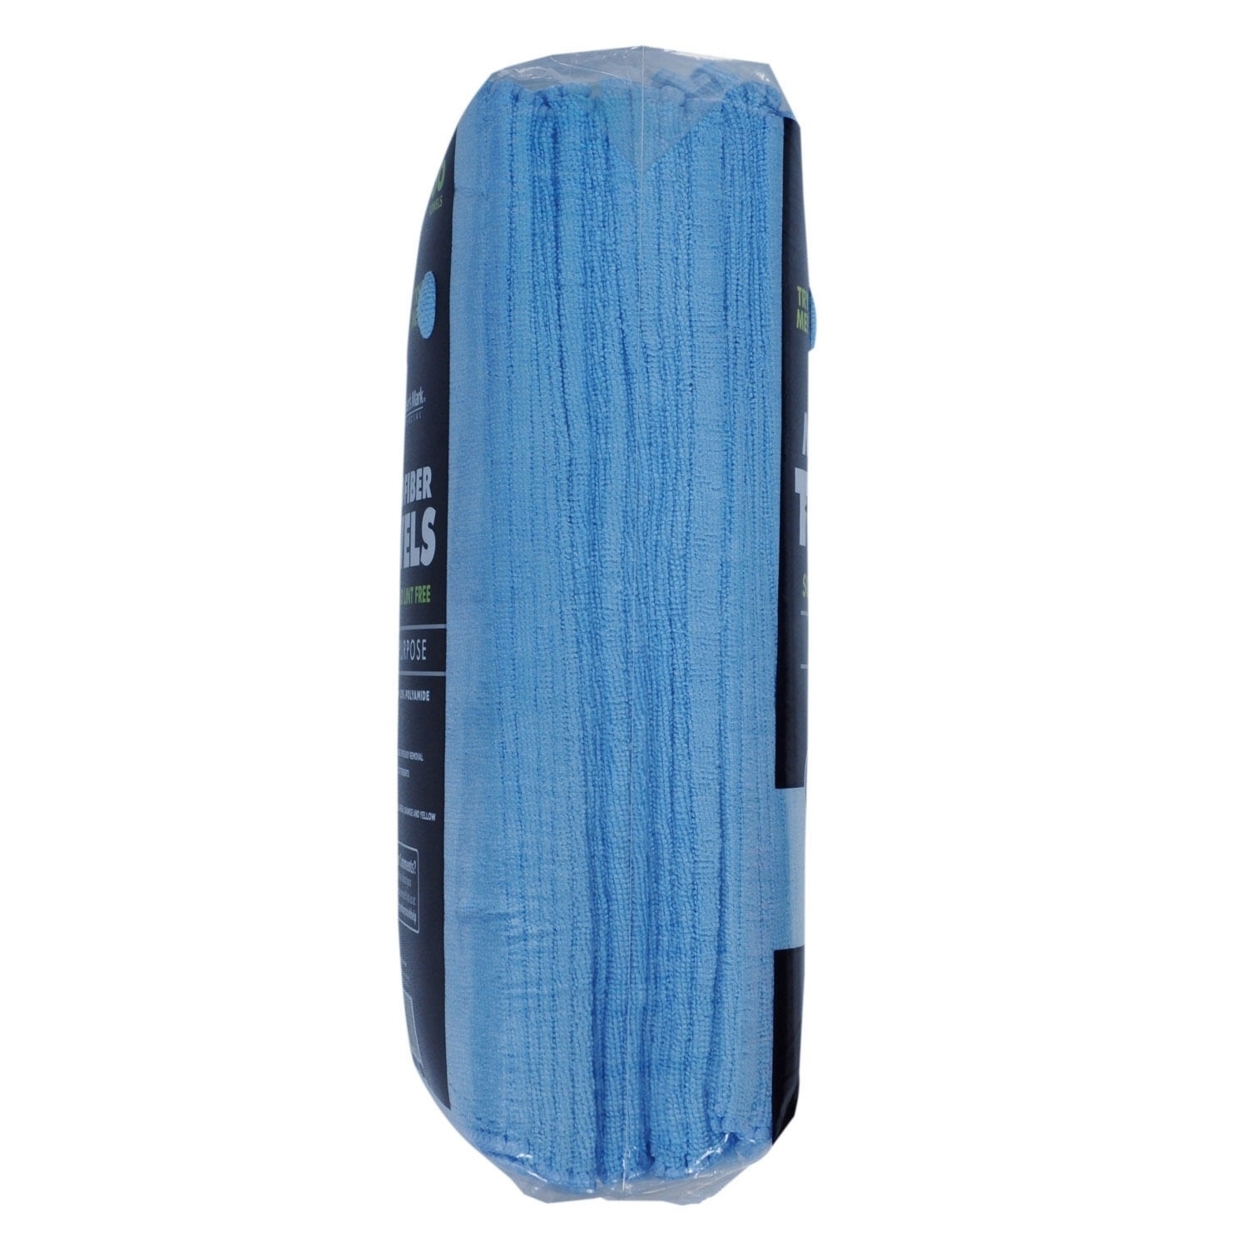 Member's Mark 16 X 16 Microfiber Towels, 36 Count (Blue)